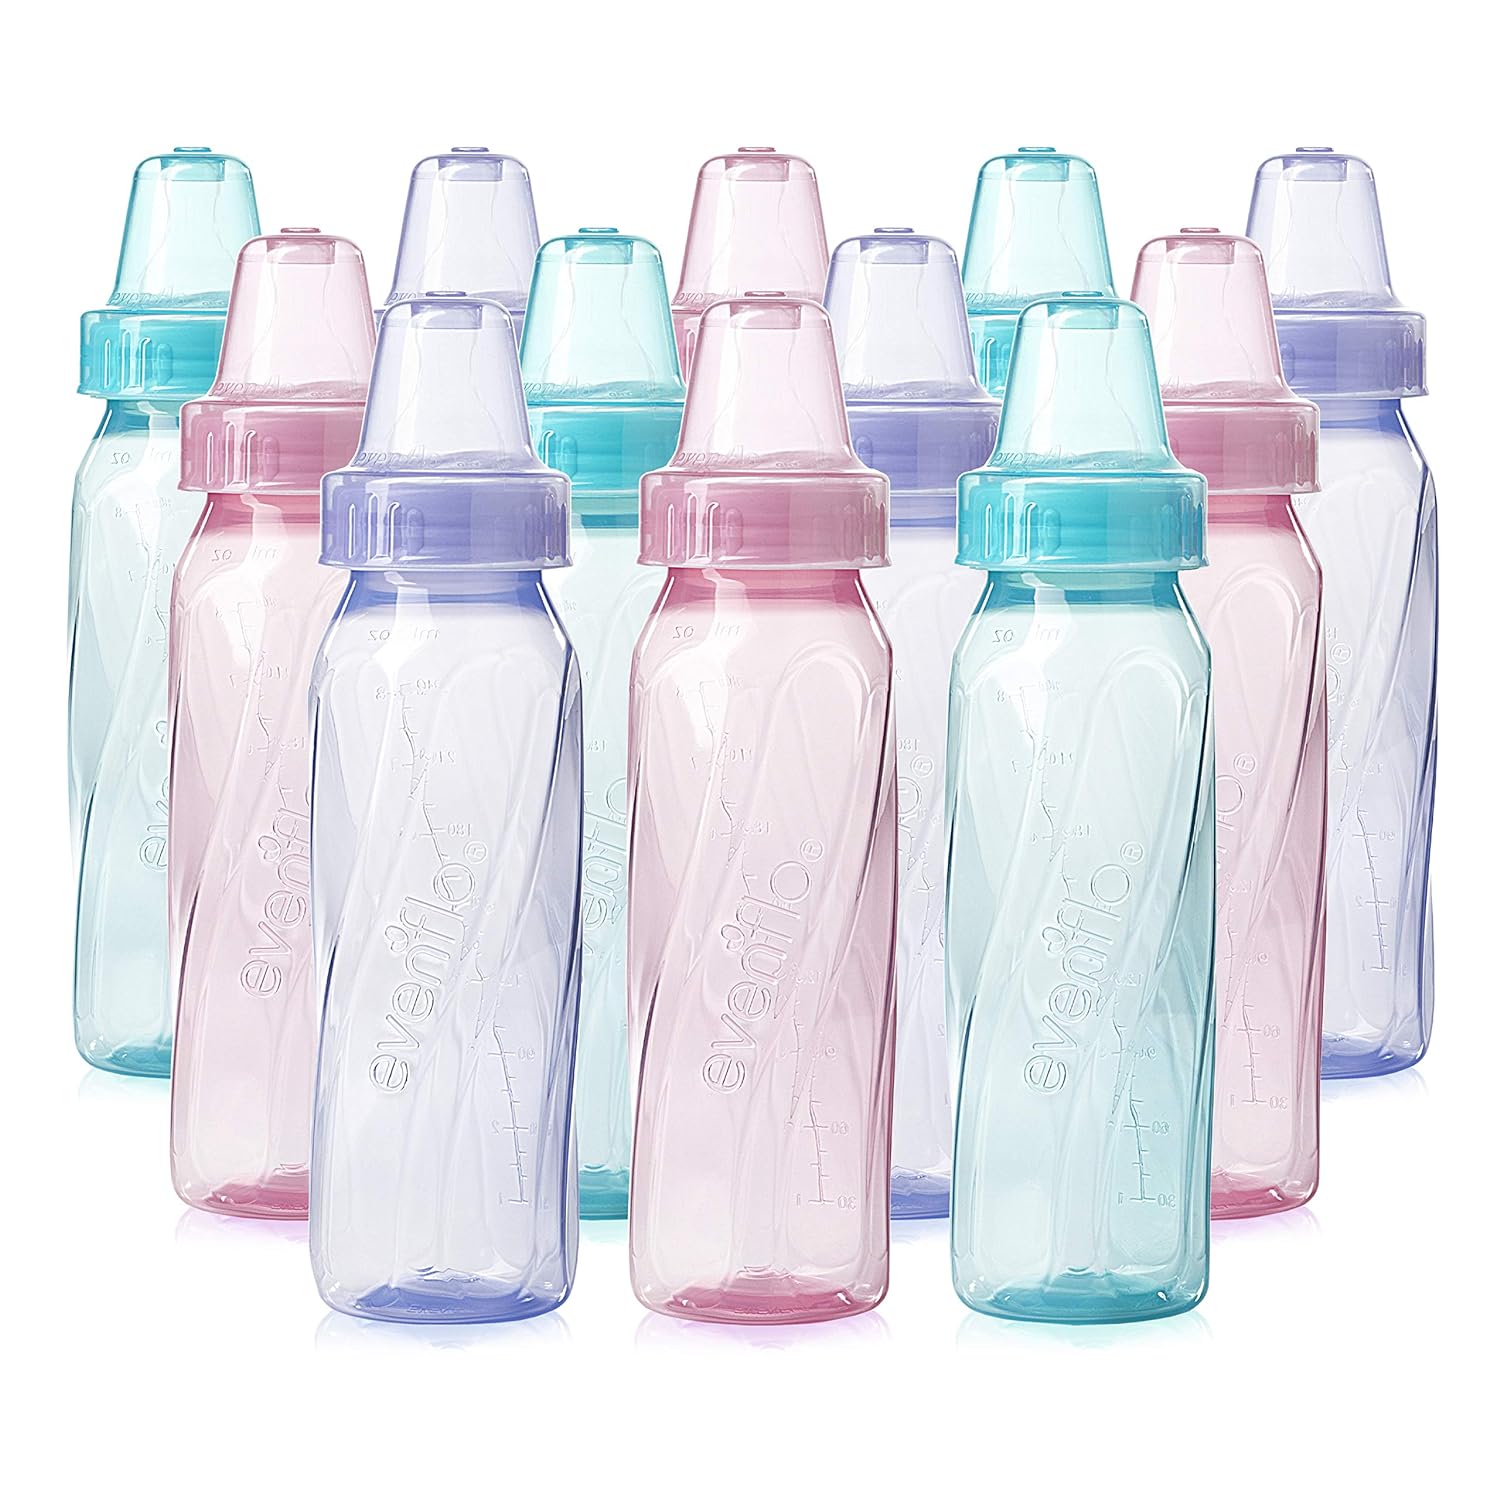 Best Baby Bottle: Top Picks for Happy Feeding